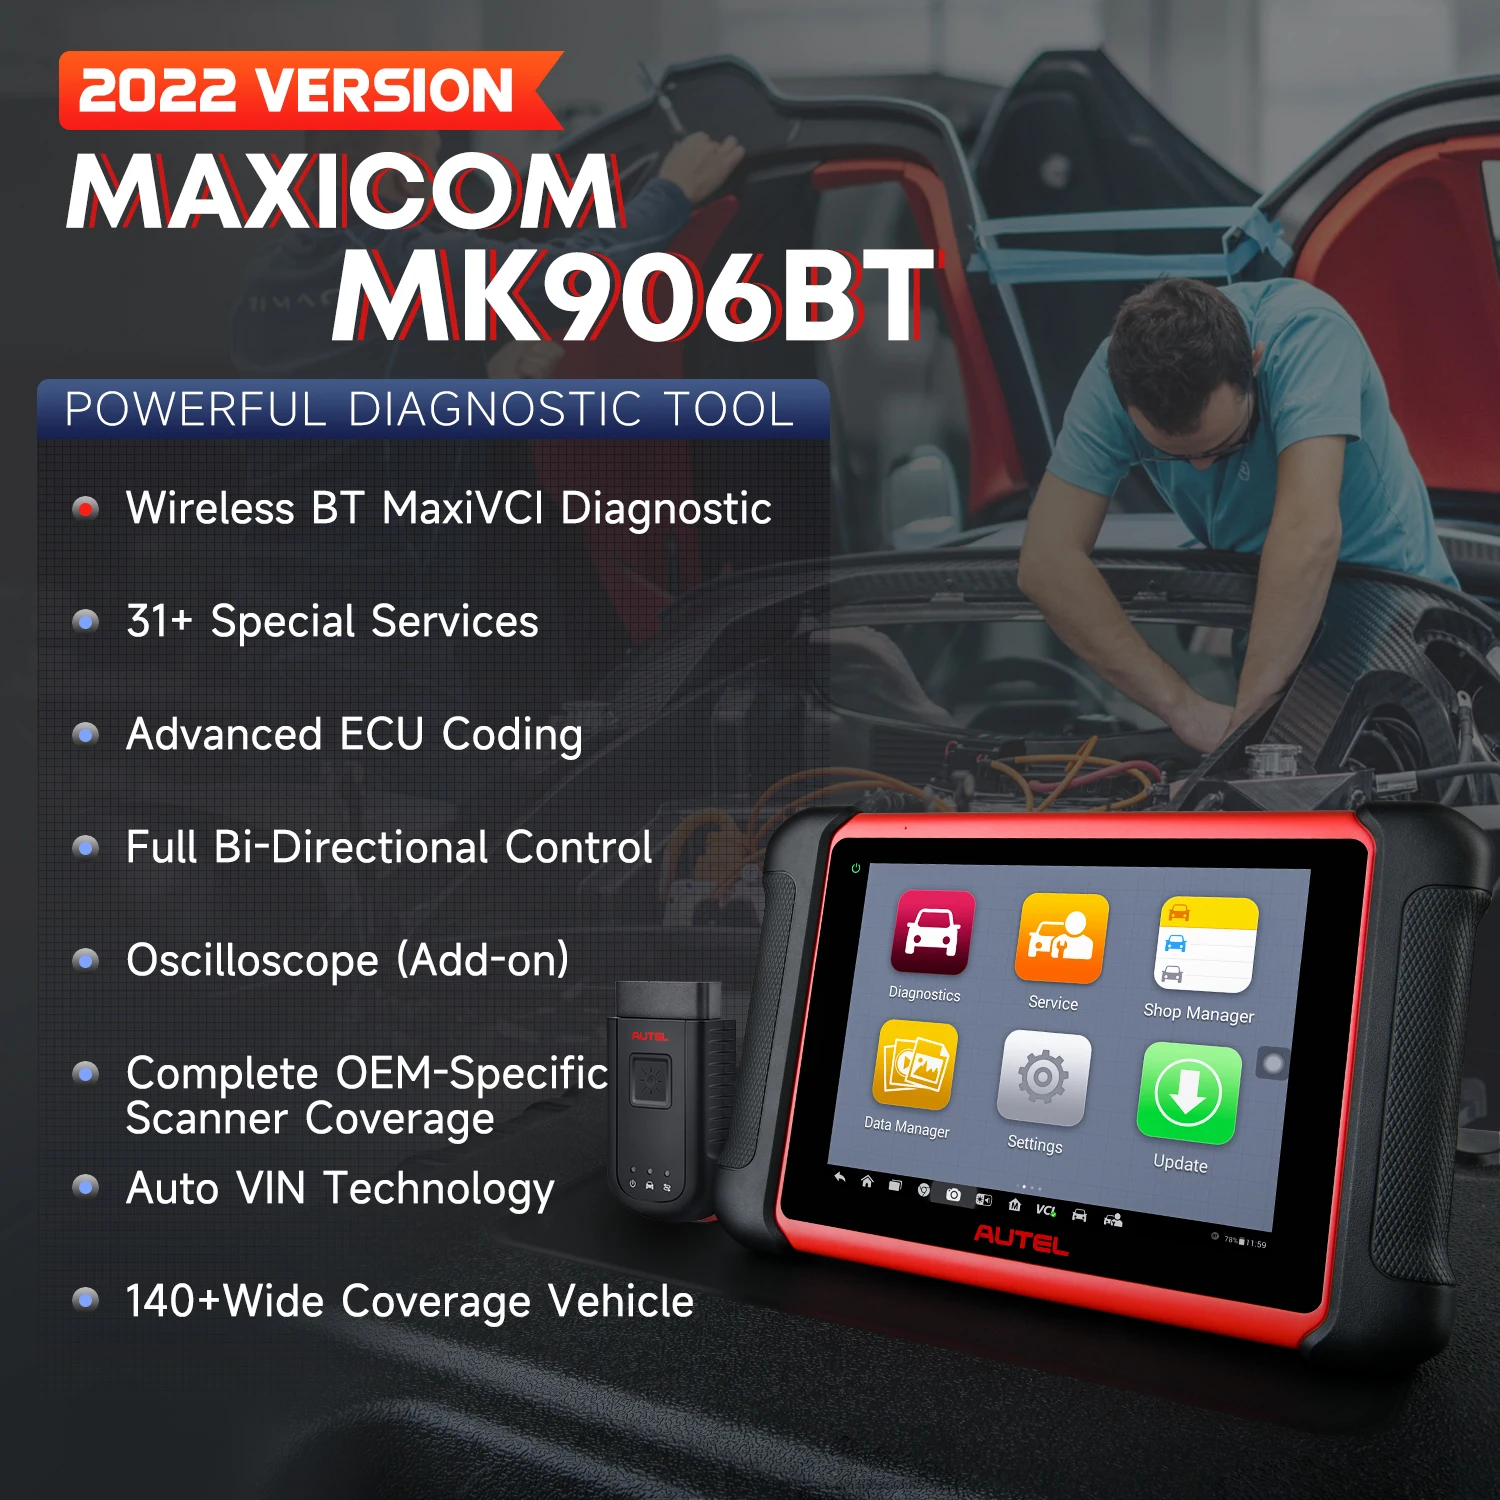 

Autel MaxiCOM MK906BT Auto Diagnostic Tool,ECU Coding,Bi-Directional VAG Guided,36 Services Functions Same as MK906Pro/MS906Pro